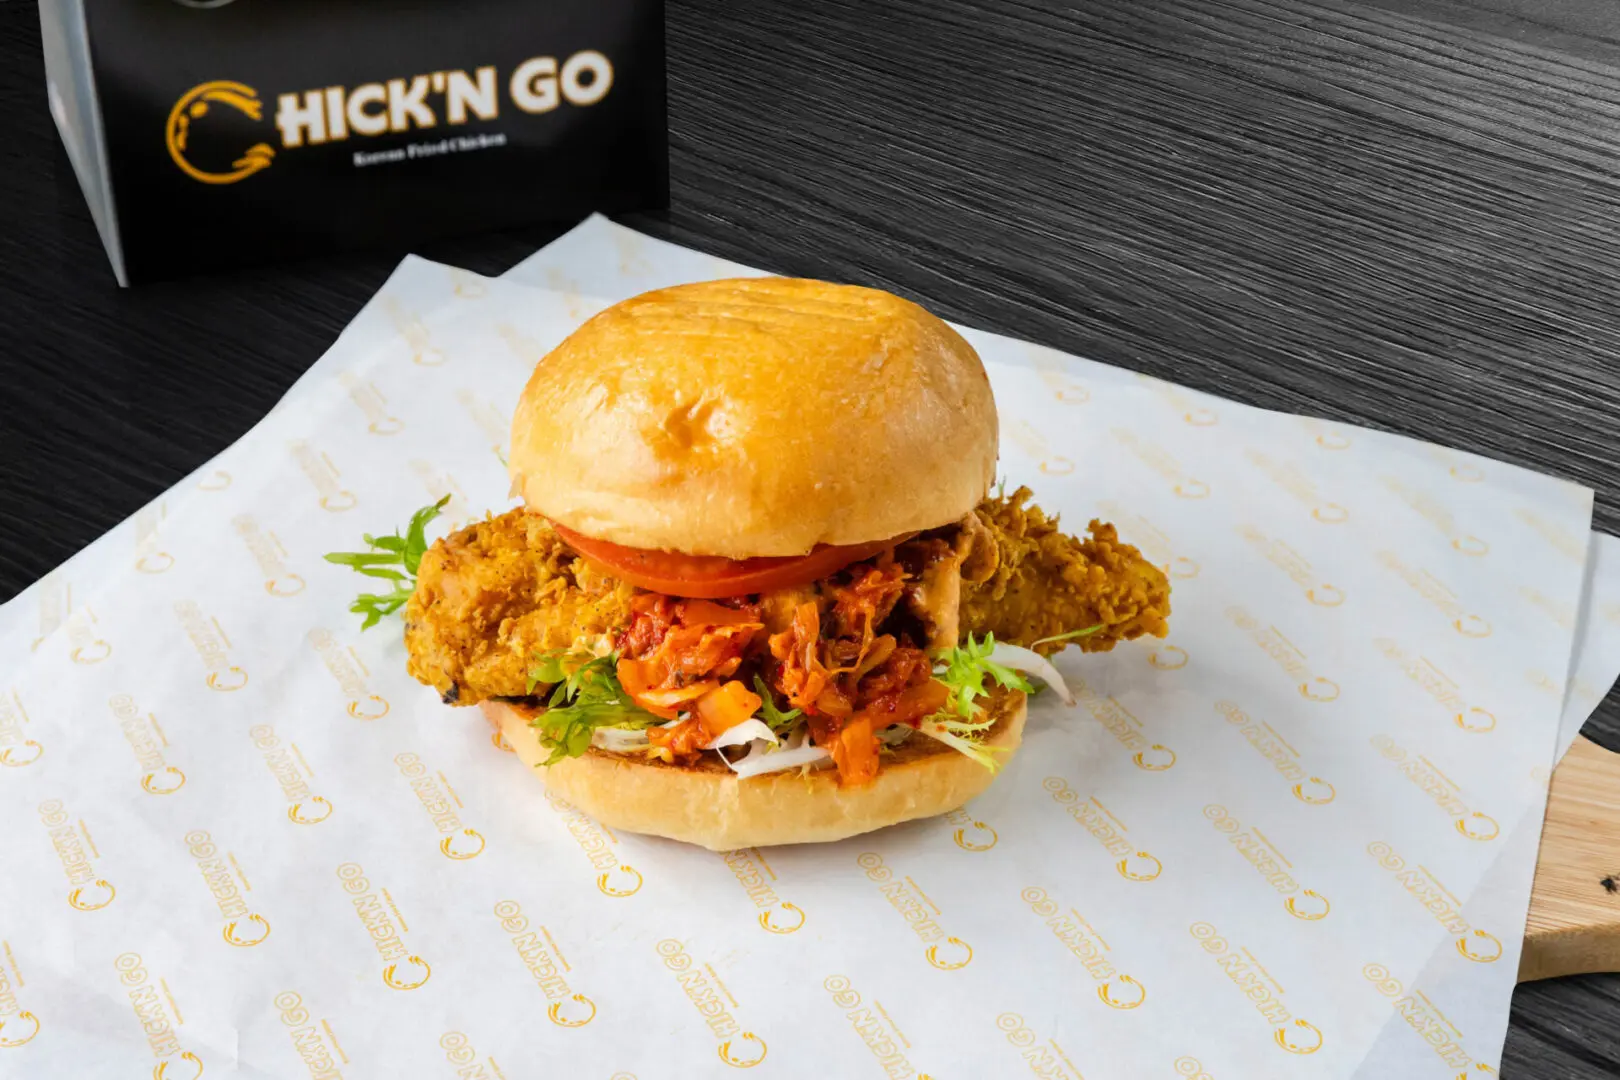 A chicken sandwich sitting on top of a bun.